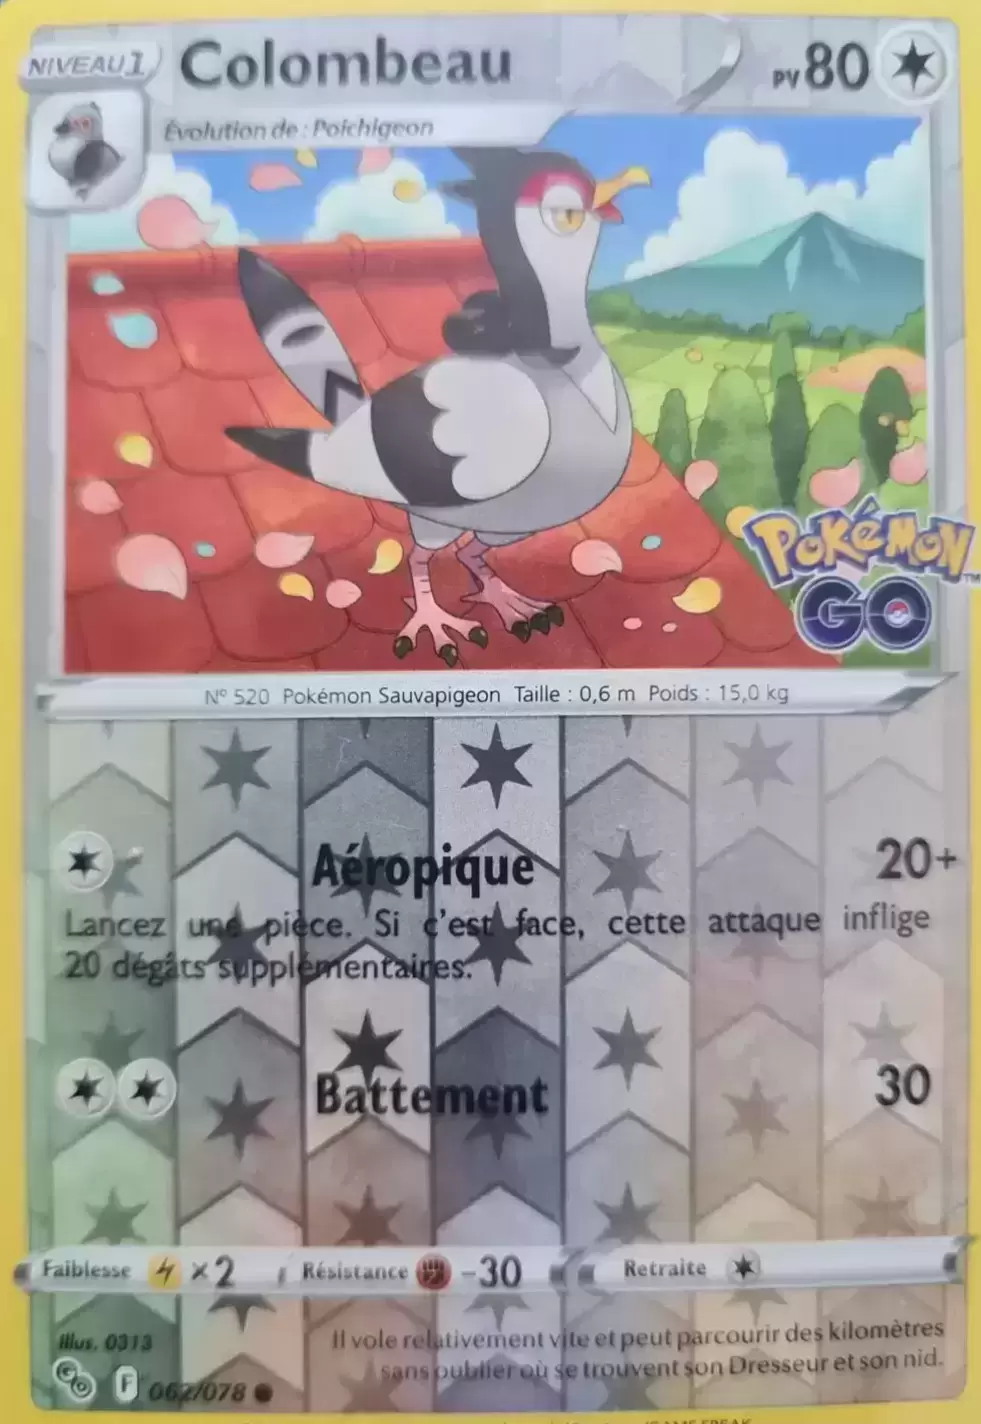 Pokémon Go - Colombeau Reverse